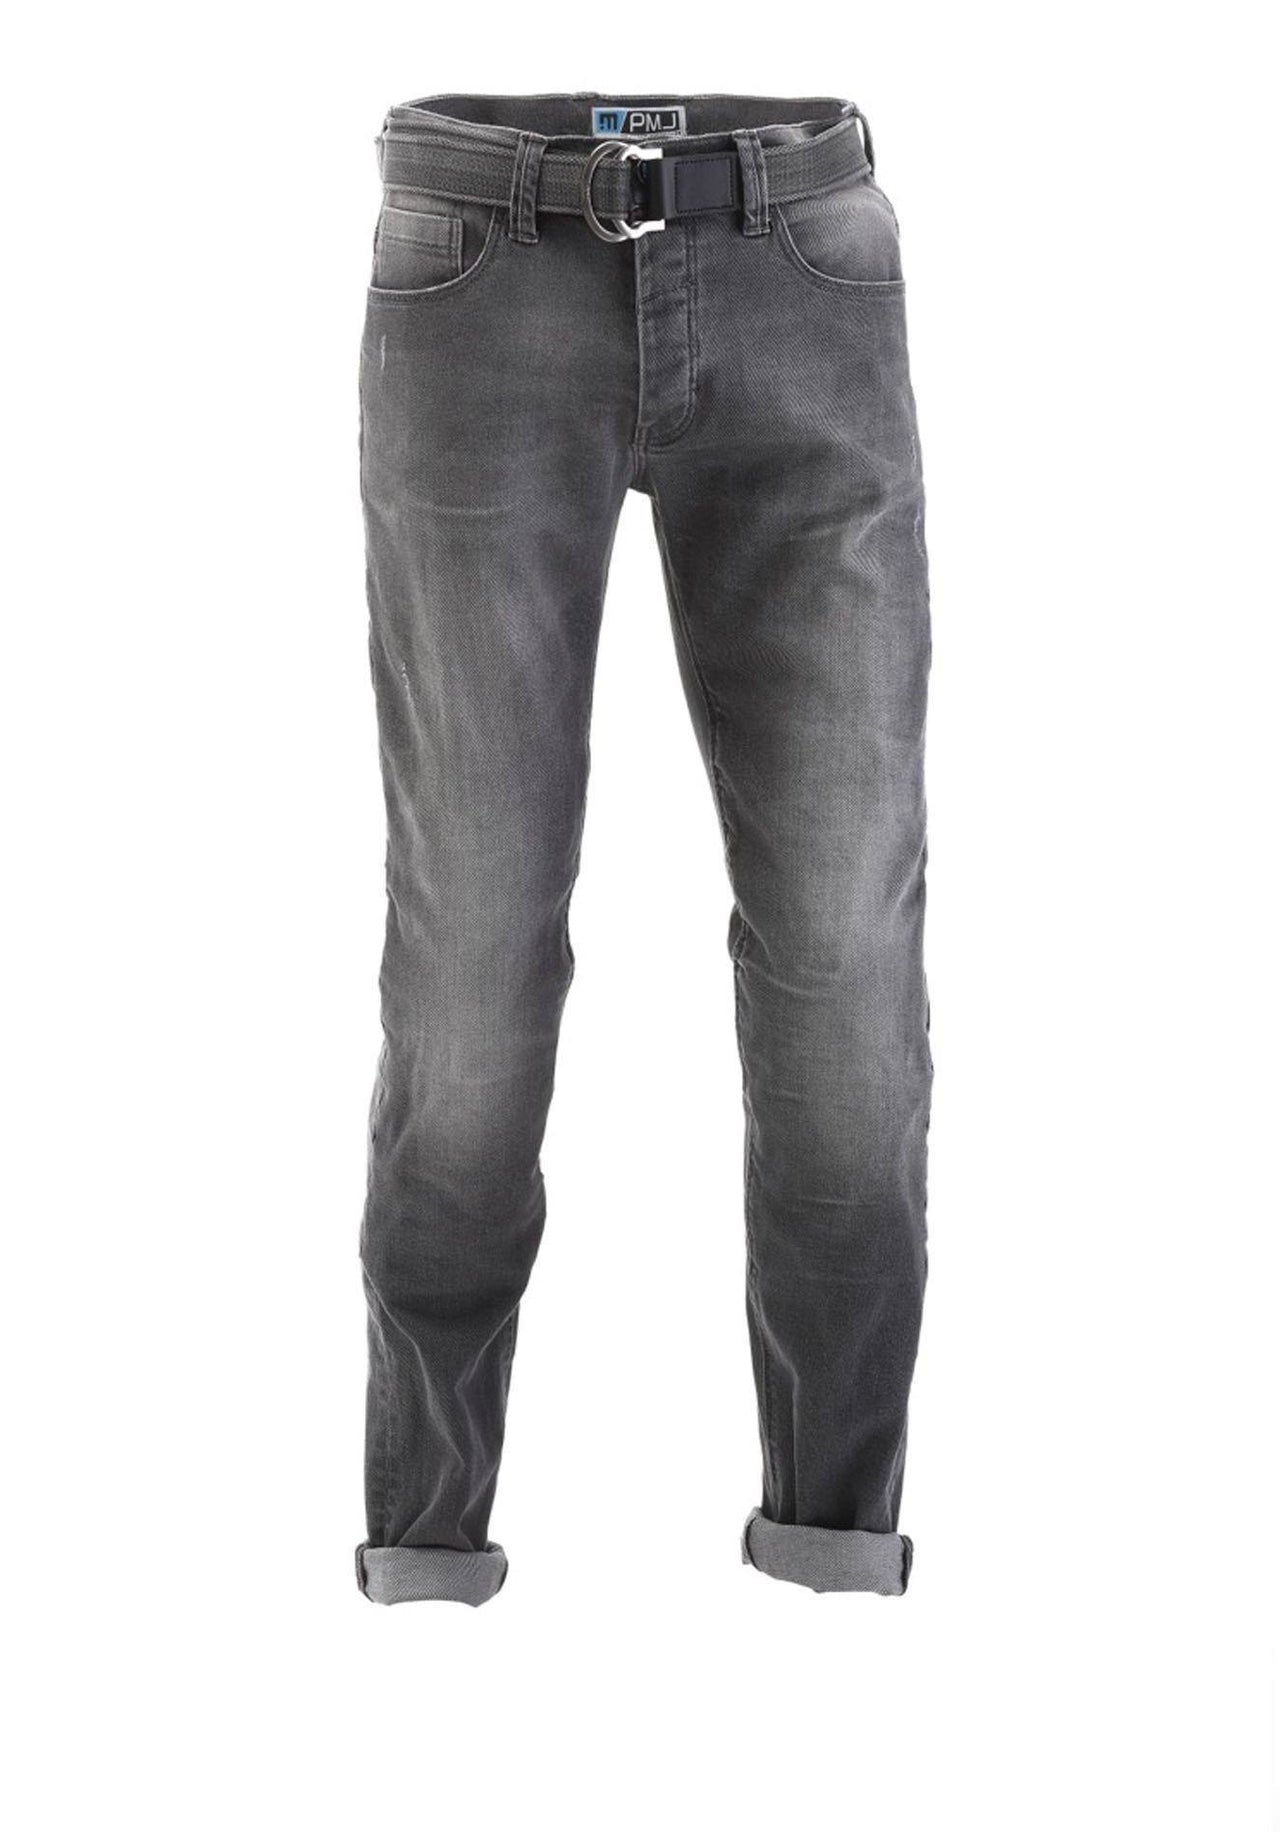 PROMO JEANS CAFERACER,jeans, #collections#, -spazio moto- bastia umbra - perugia